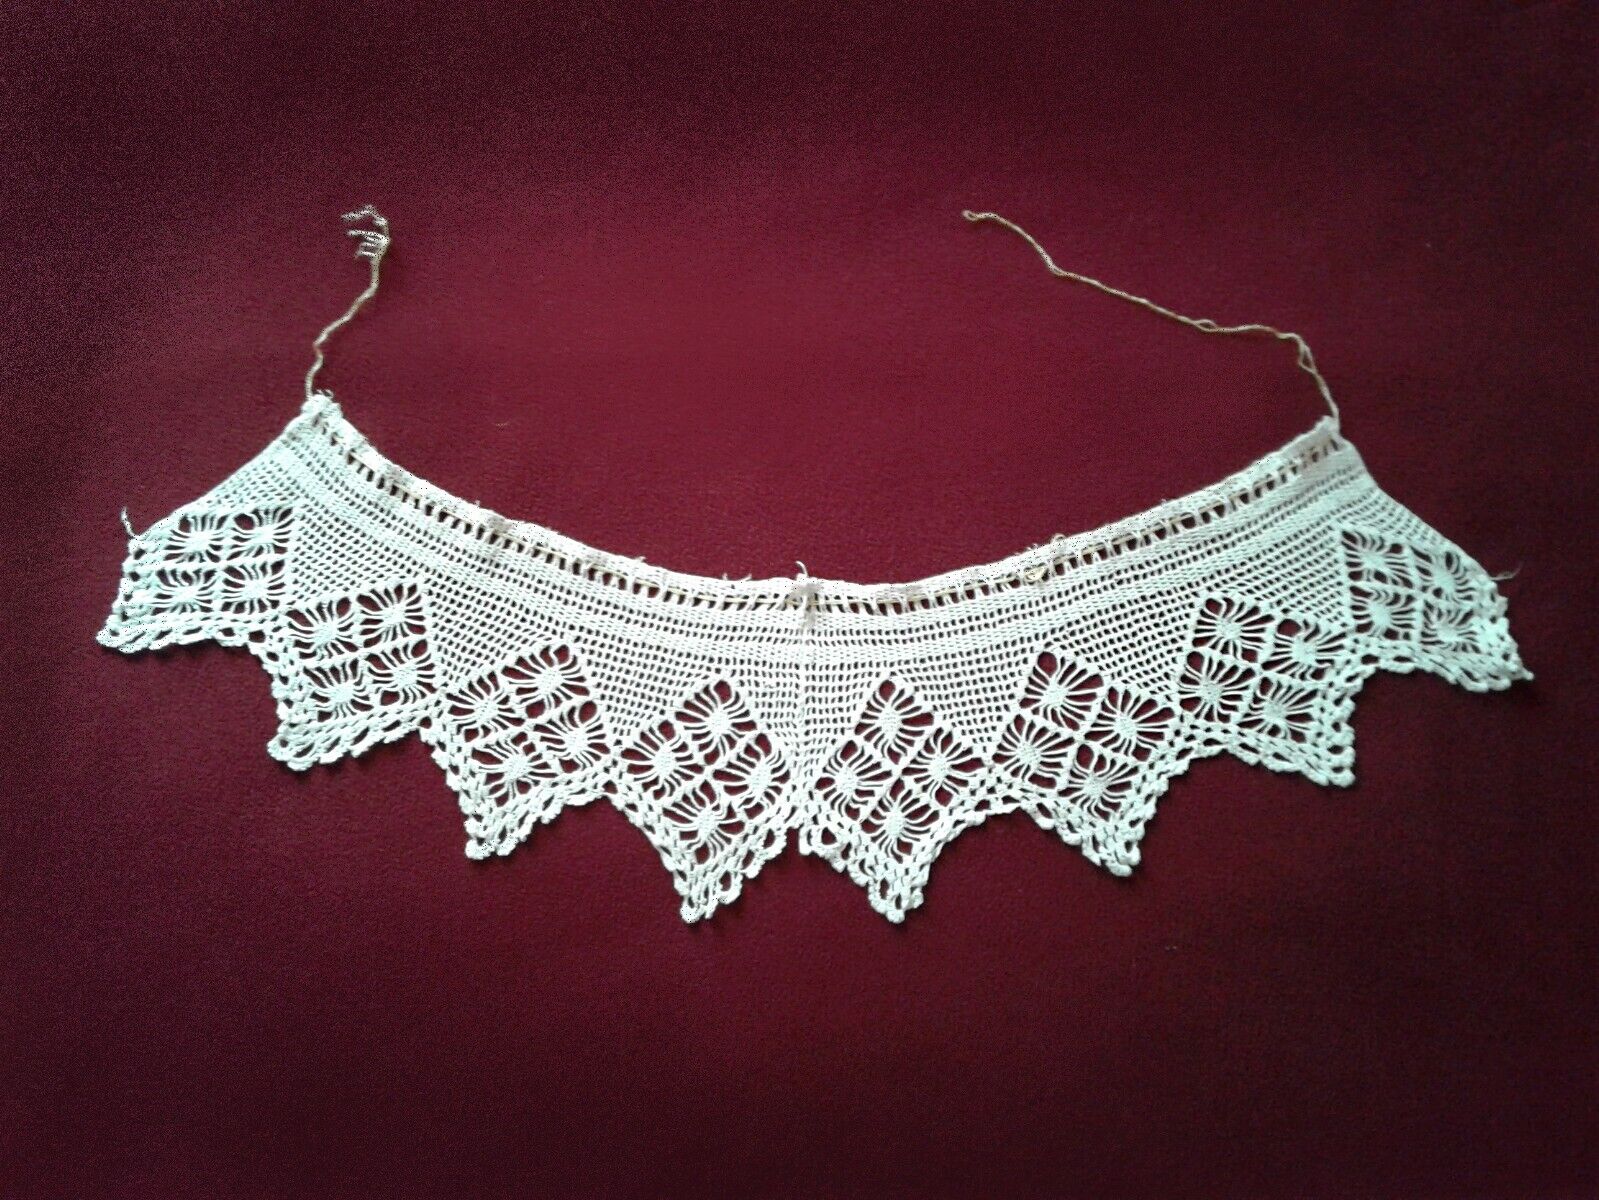 Antique Crochet Lace Collar Hand Crocheted White Cotton Handmade